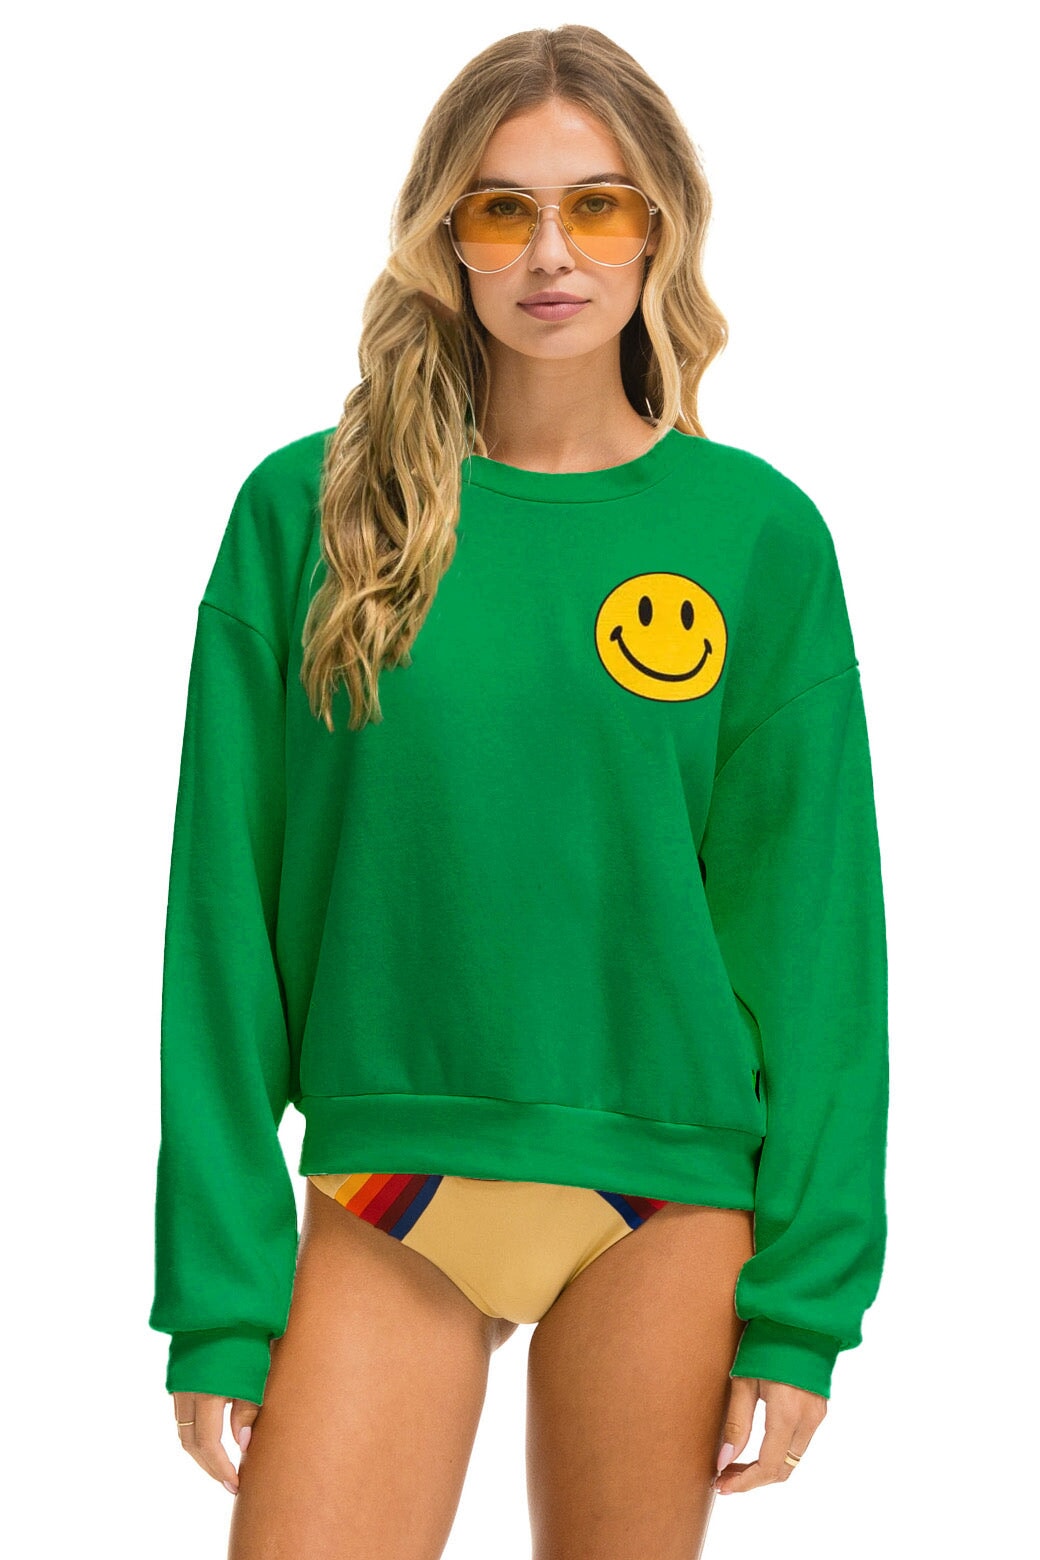 SMILEY 2 RELAXED LIGHT WEIGHT CREW SWEATSHIRT - KELLY GREEN Sweatshirt Aviator Nation 